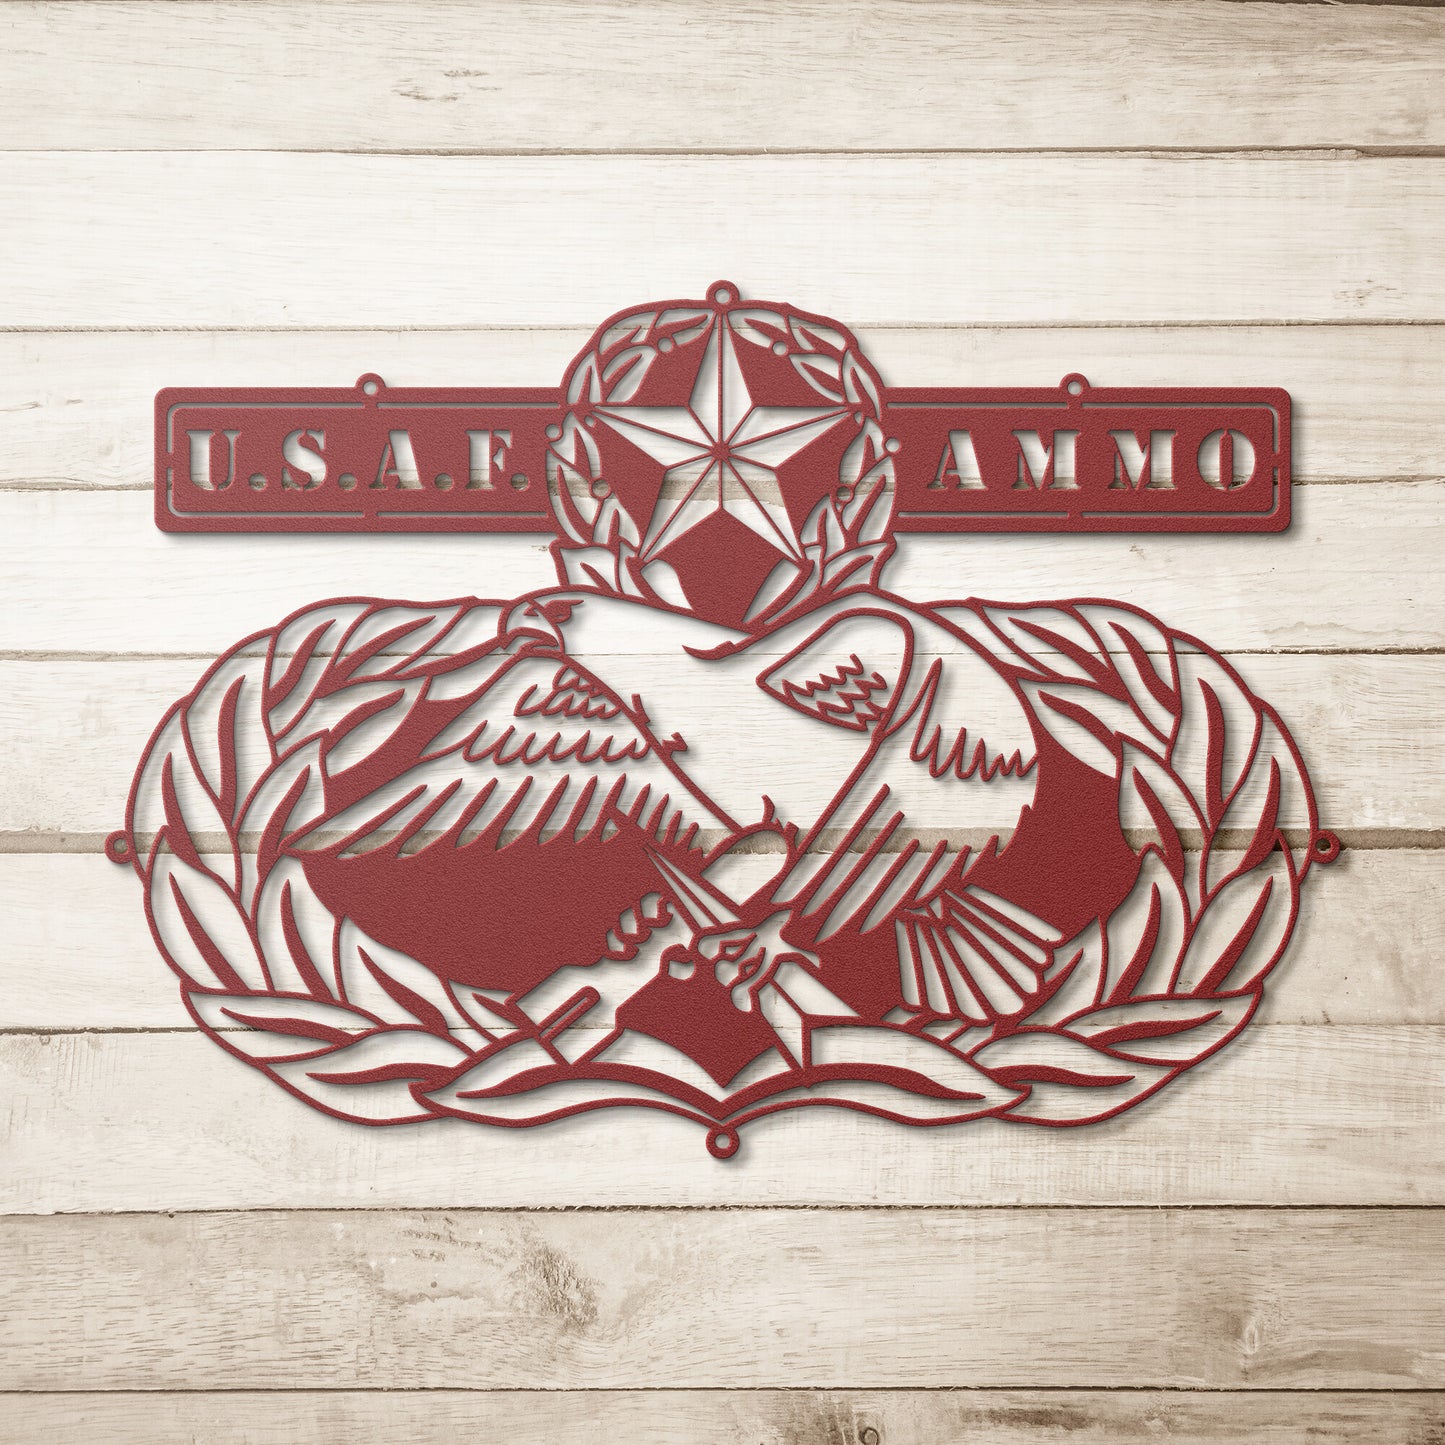 AMMO Original Old Maintenance Badge Die Cut Hanging Metal Wall Sign